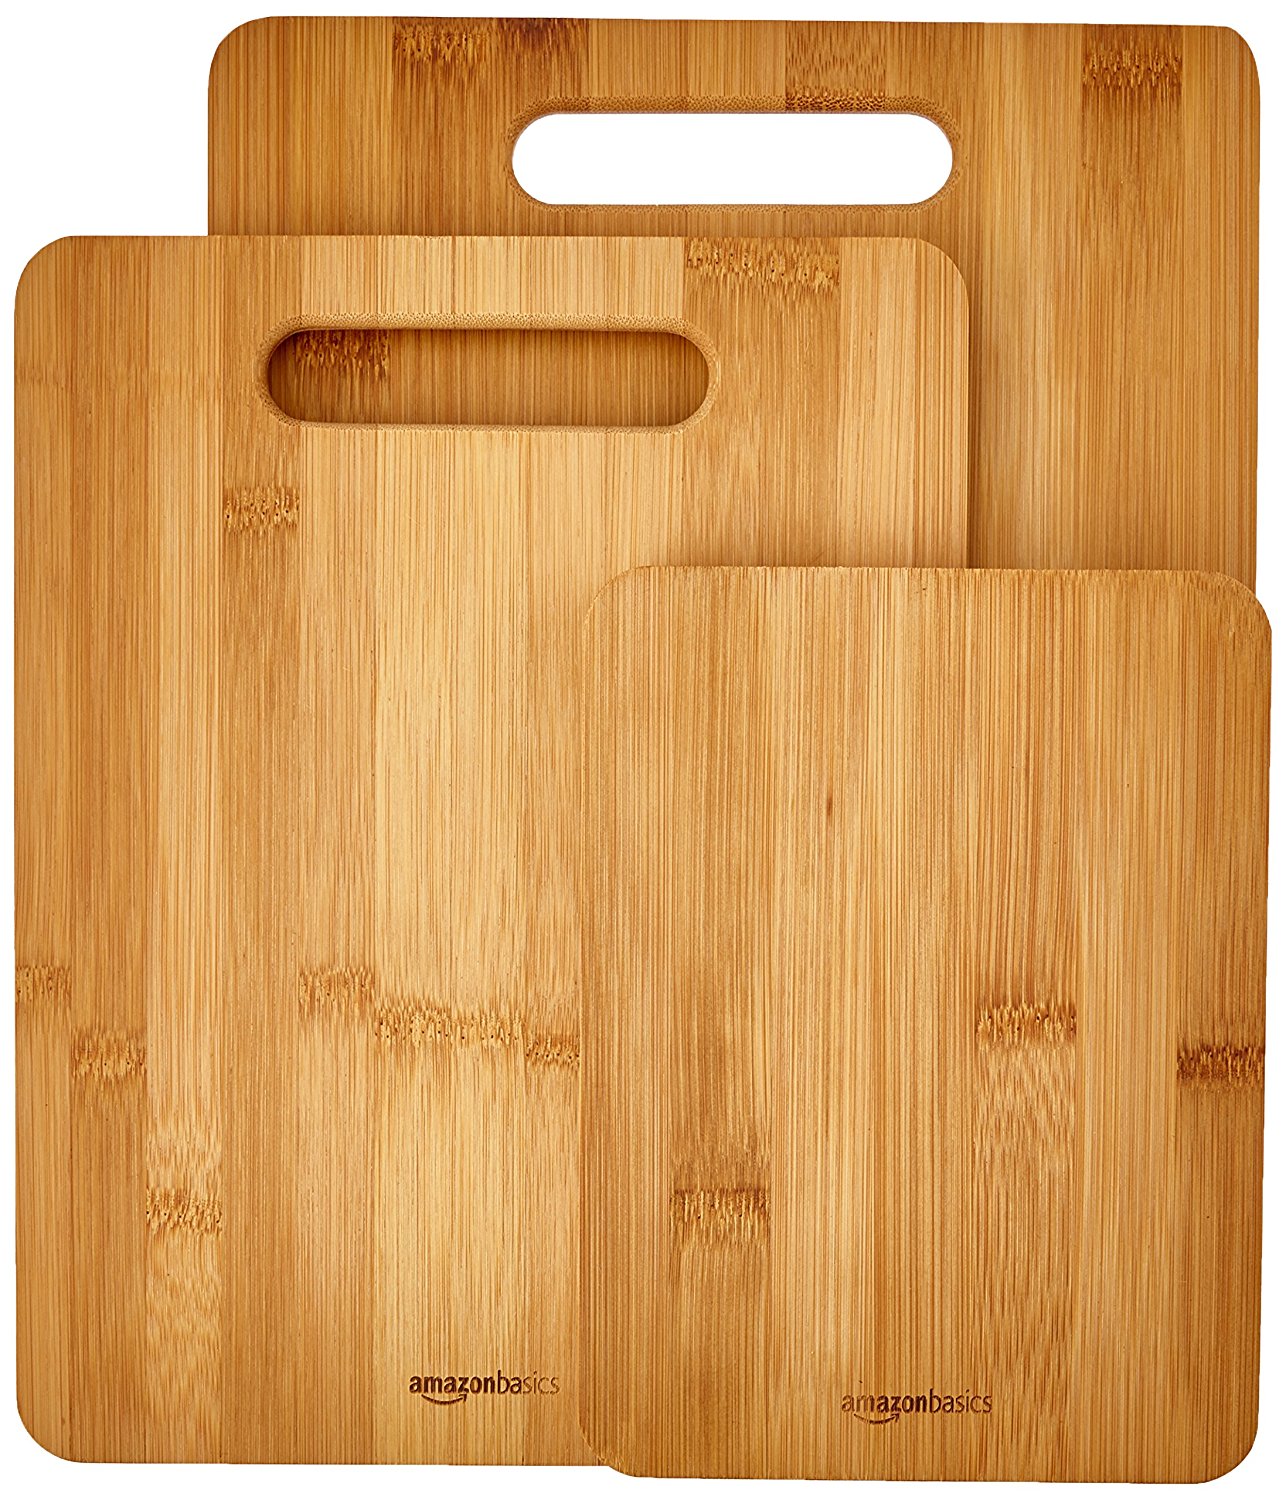 3 Piece Bamboo Cutting Board Set from AmazonBasics – Just $9.99!